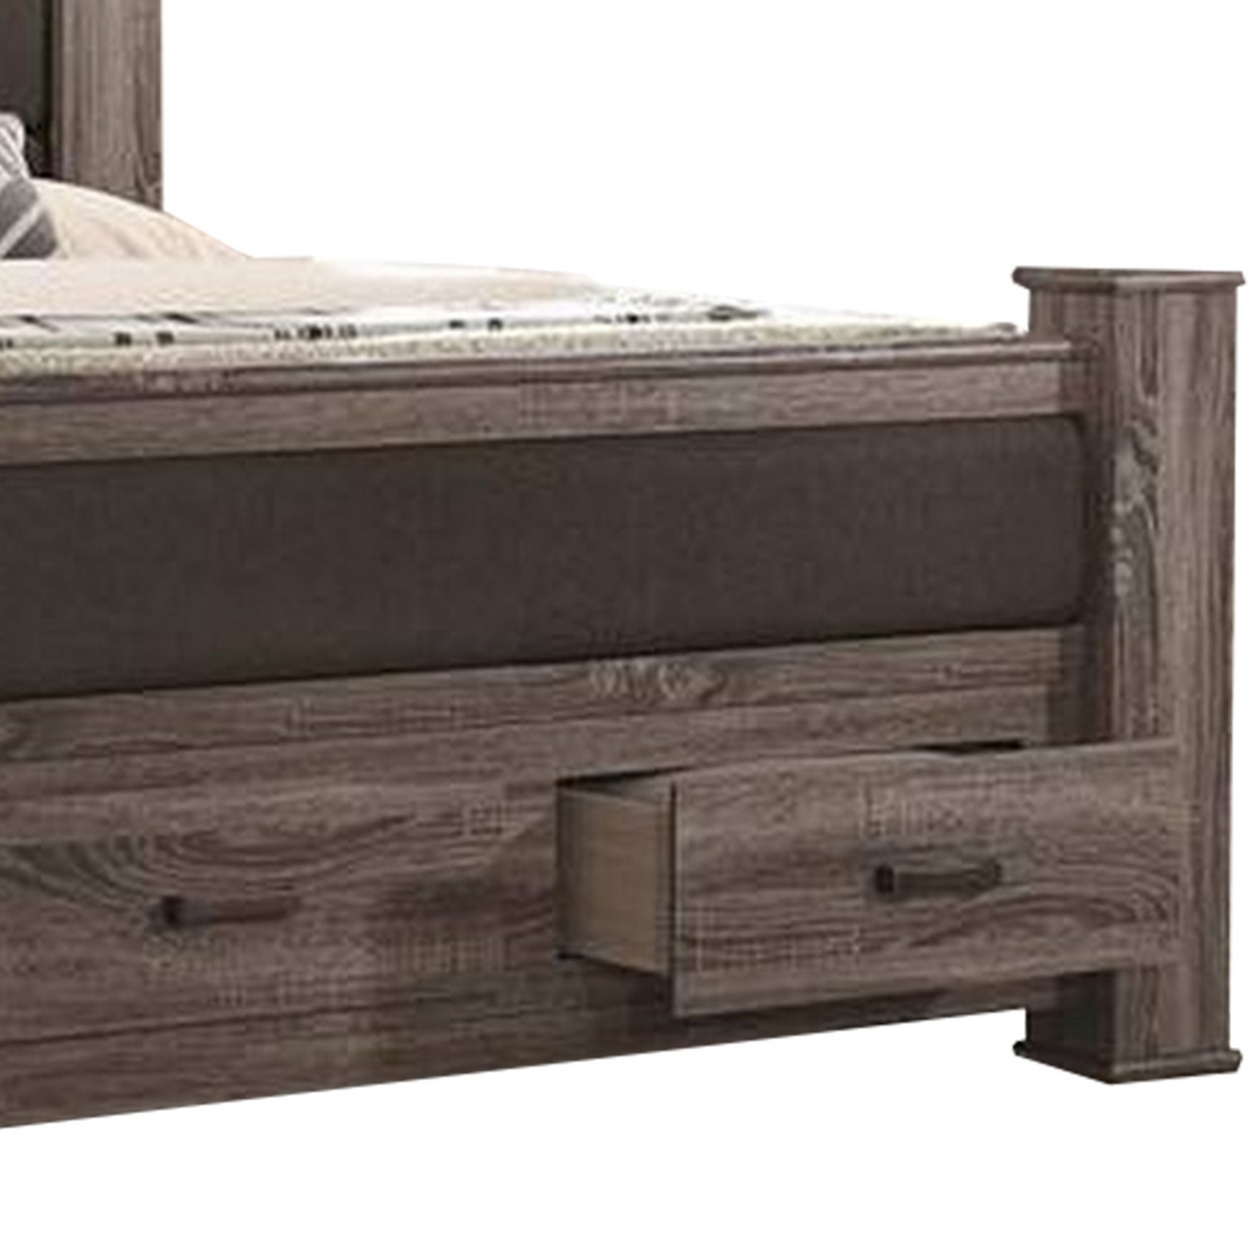 Fort Wood California King Bed With 2 Drawers, Upholstered Panel, Oak Gray- Saltoro Sherpi